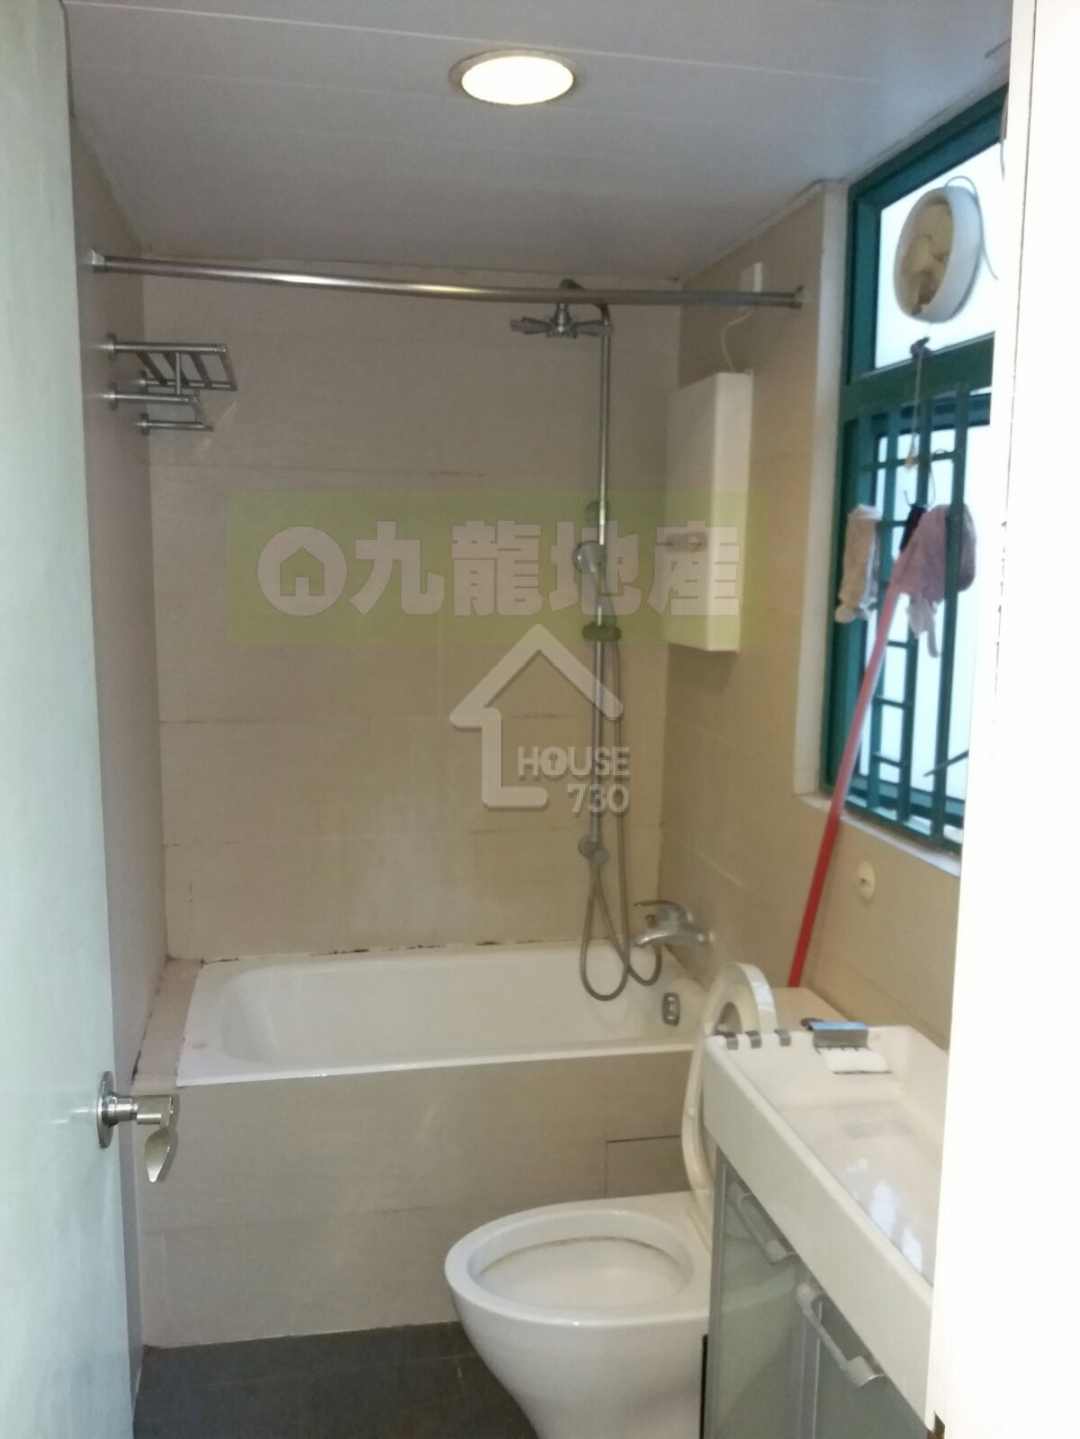 Sham Shui Po KENT PLACE Upper Floor Washroom House730-6580207